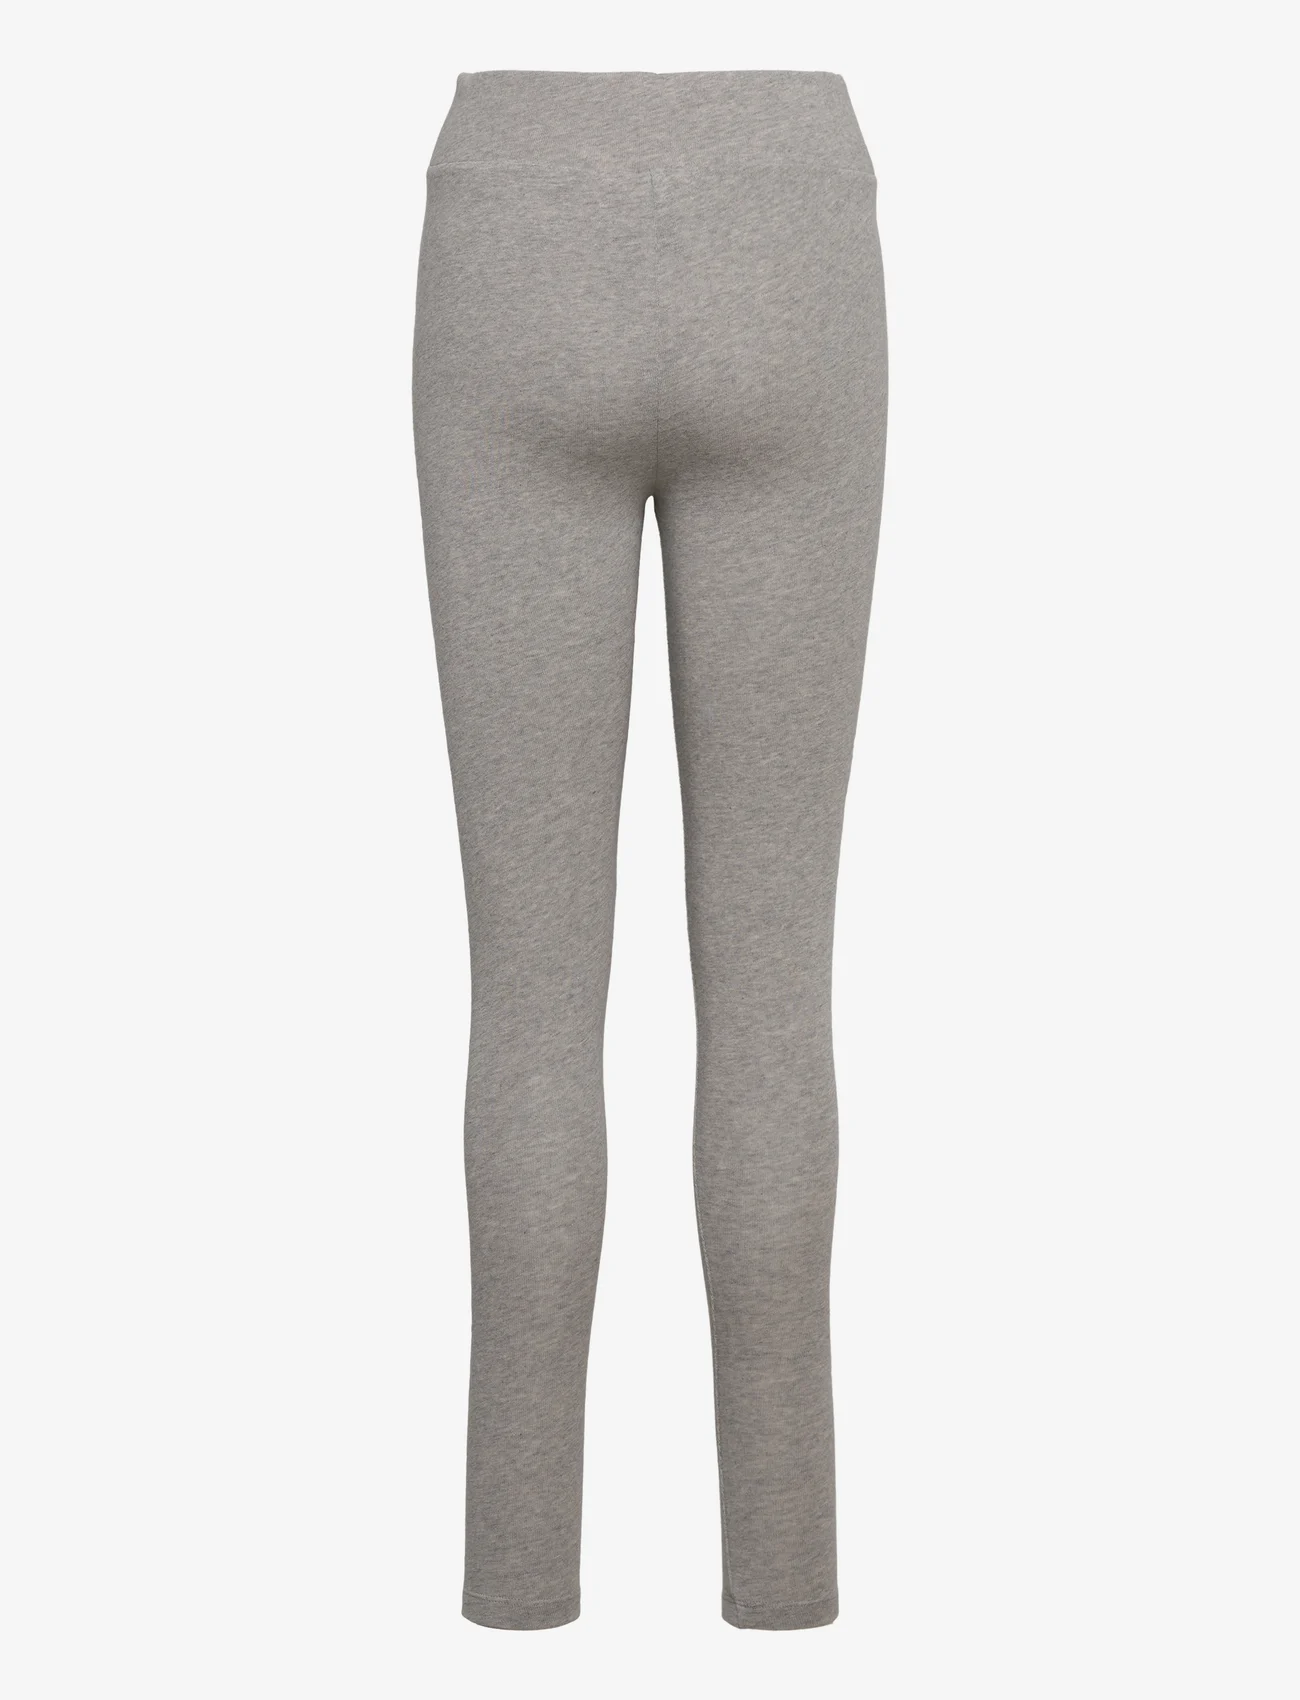 Basic Apparel - Anni soft leggings GOTS - leggings - grey mel. - 1